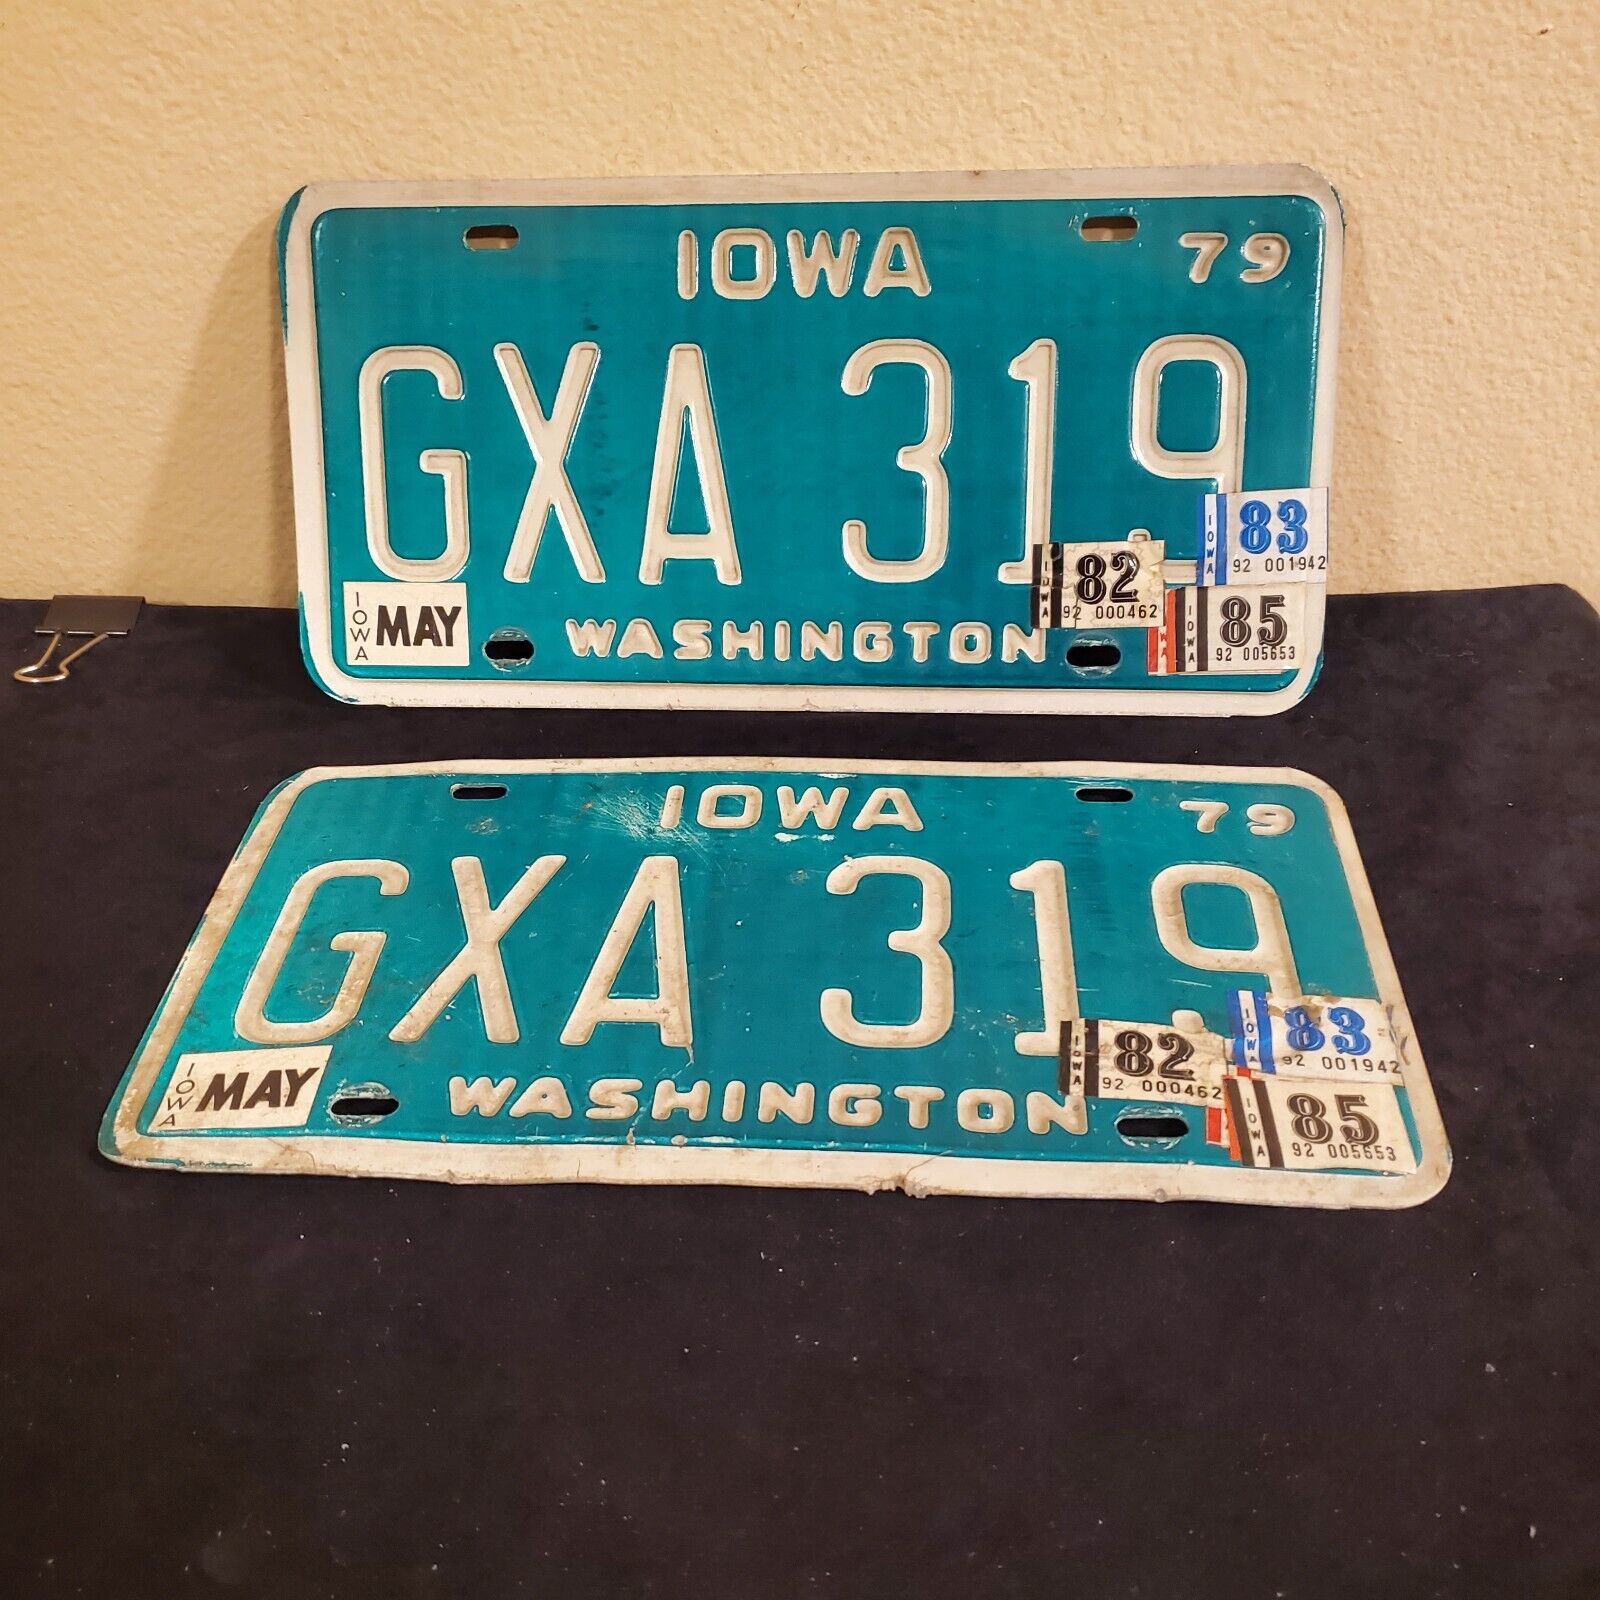 Vintage Iowa Plate 1979-85 Gxa 319 Washington County Color Is Green